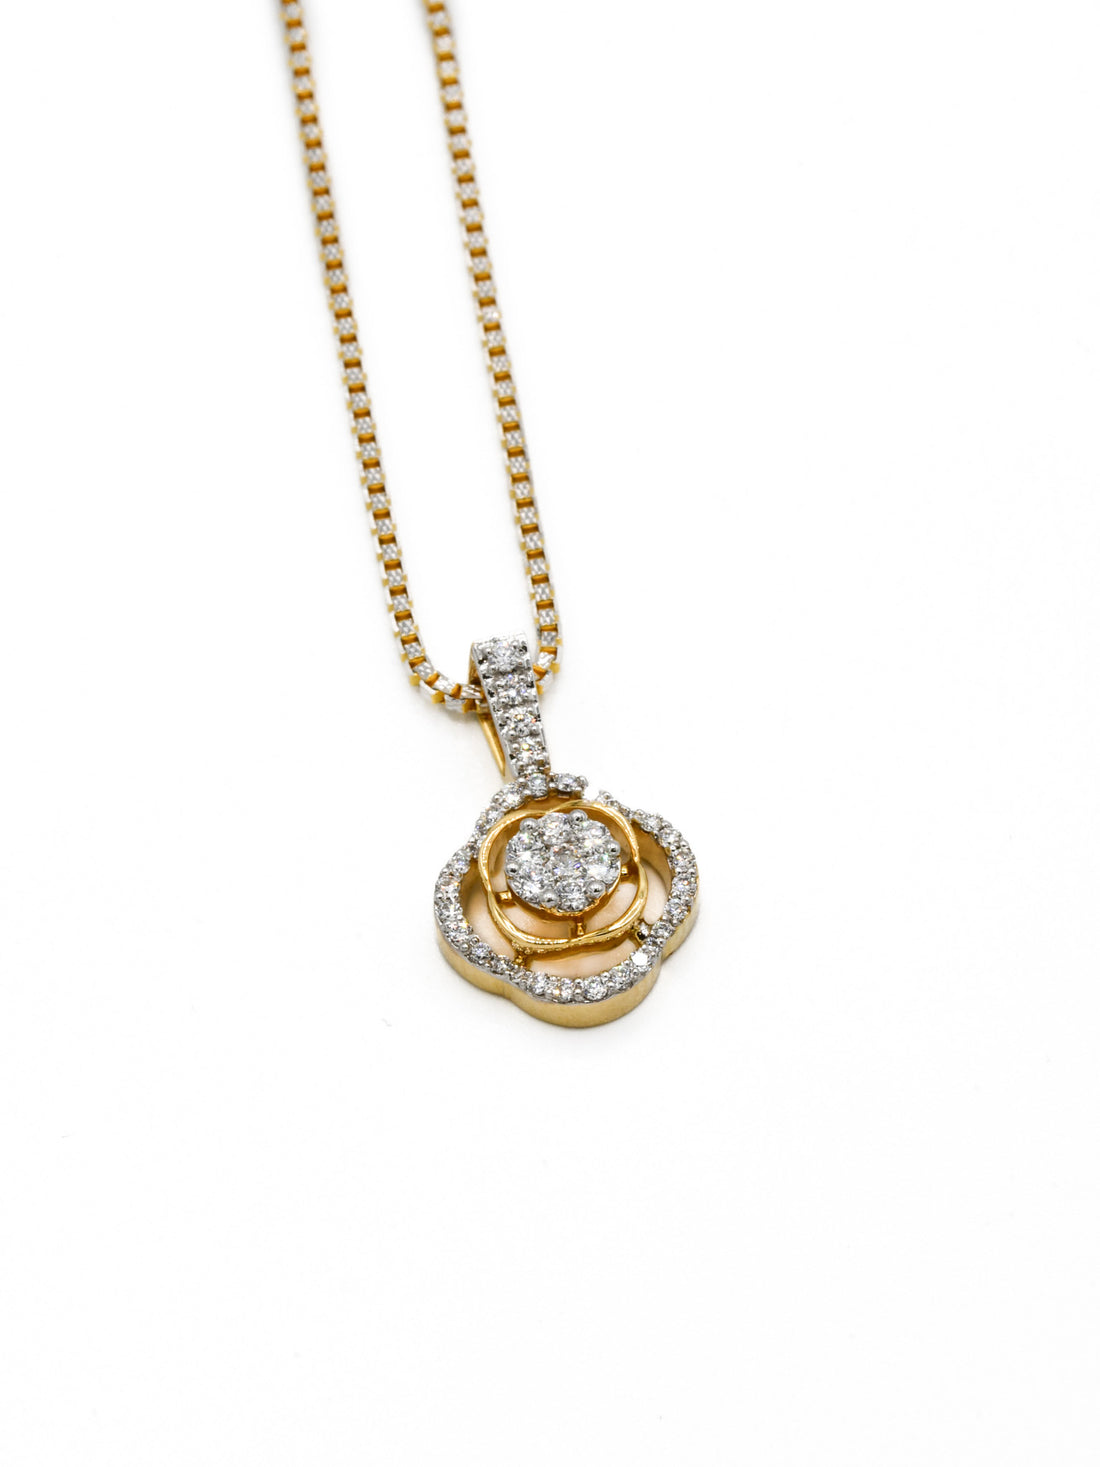 18ct Gold Diamond Pendant - 0.34 cts - Roop Darshan